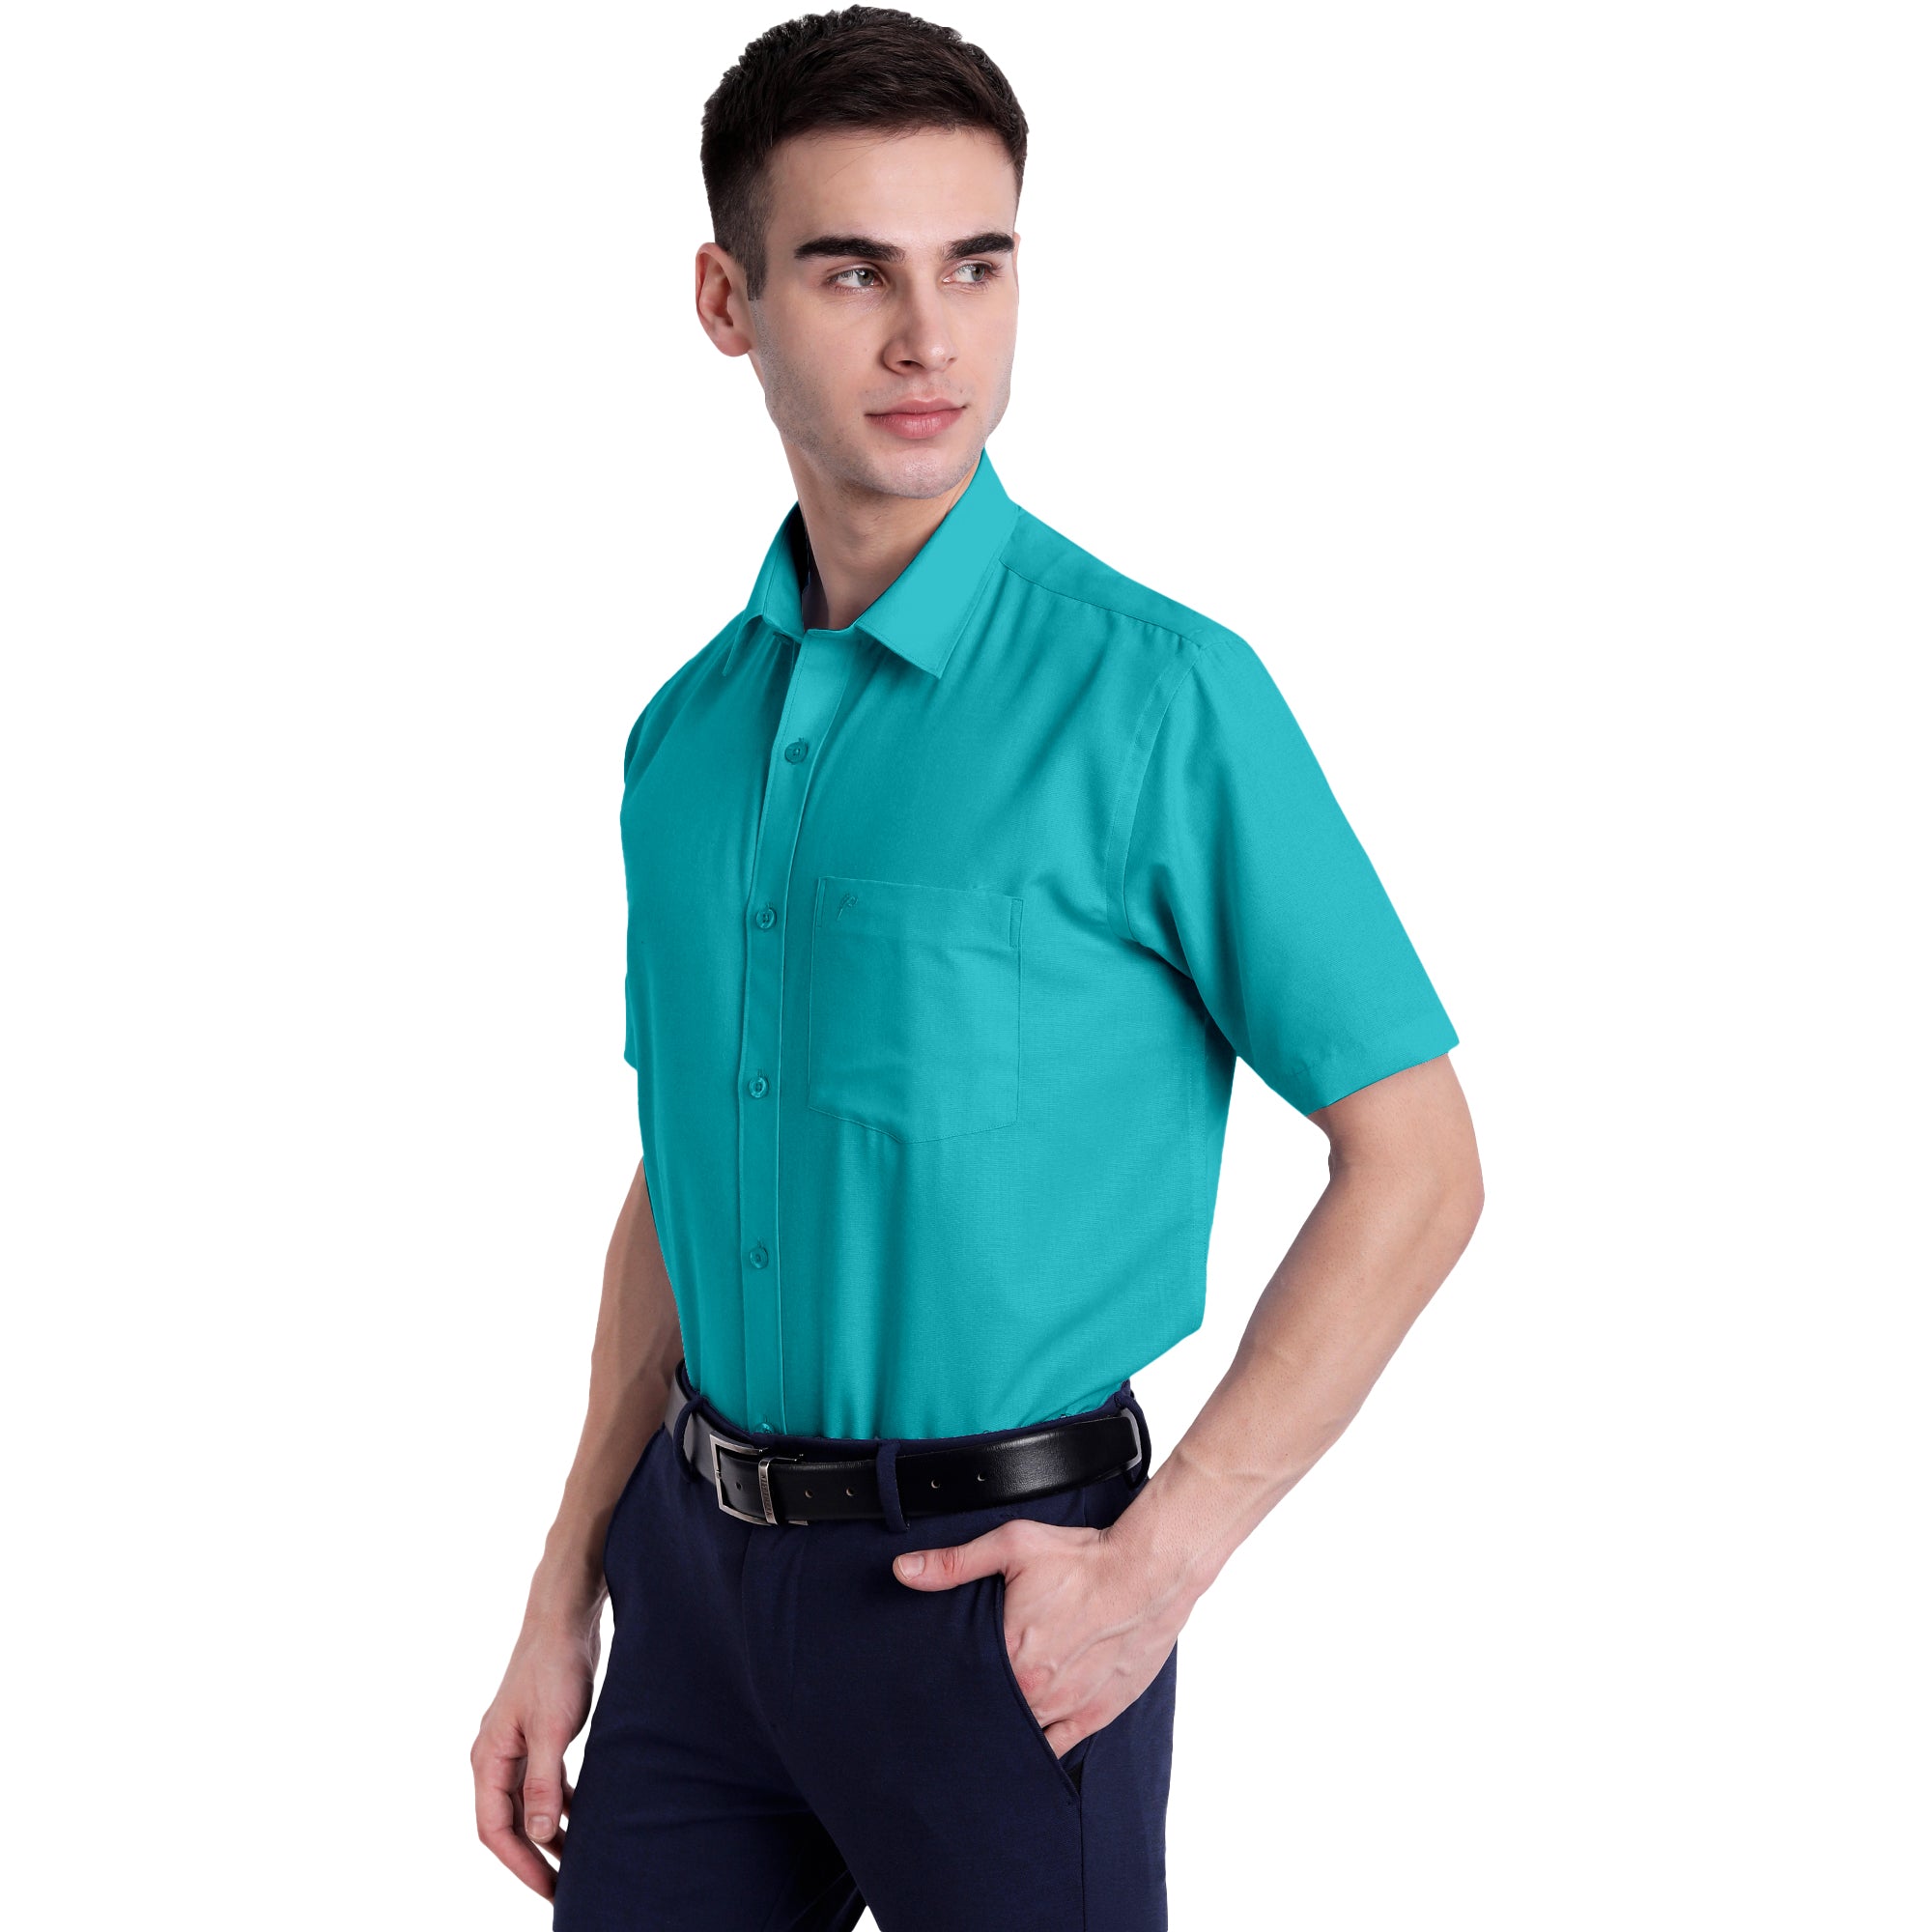 Poomer Elite Colour Shirt - Green